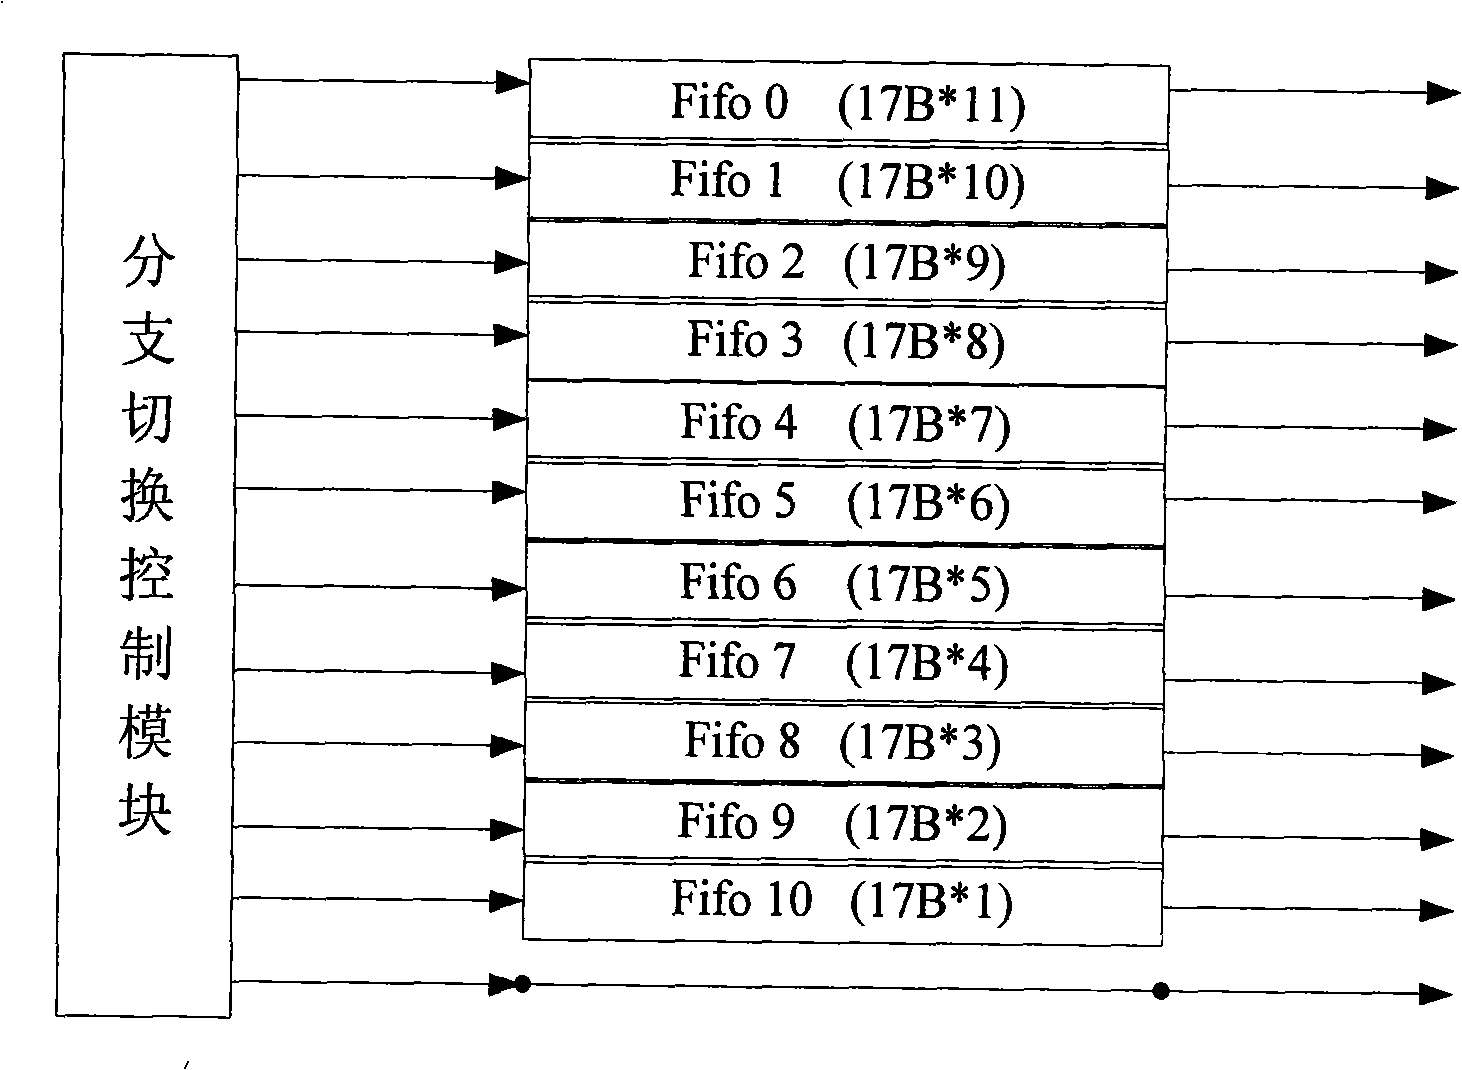 Deconvolution interweave machine and method realized based on FPGA